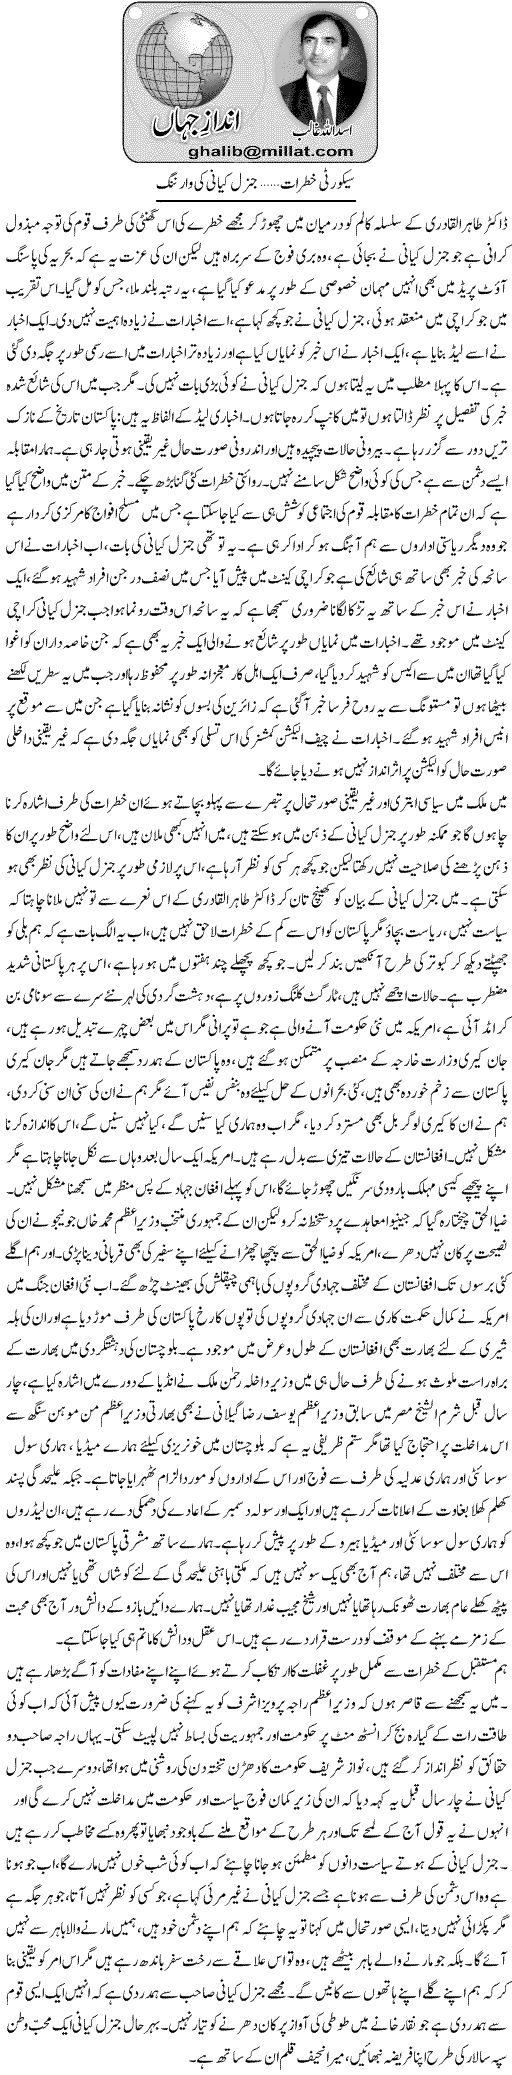 Minhaj-ul-Quran  Print Media Coverage Daily Express - Asad ullah Ghalib